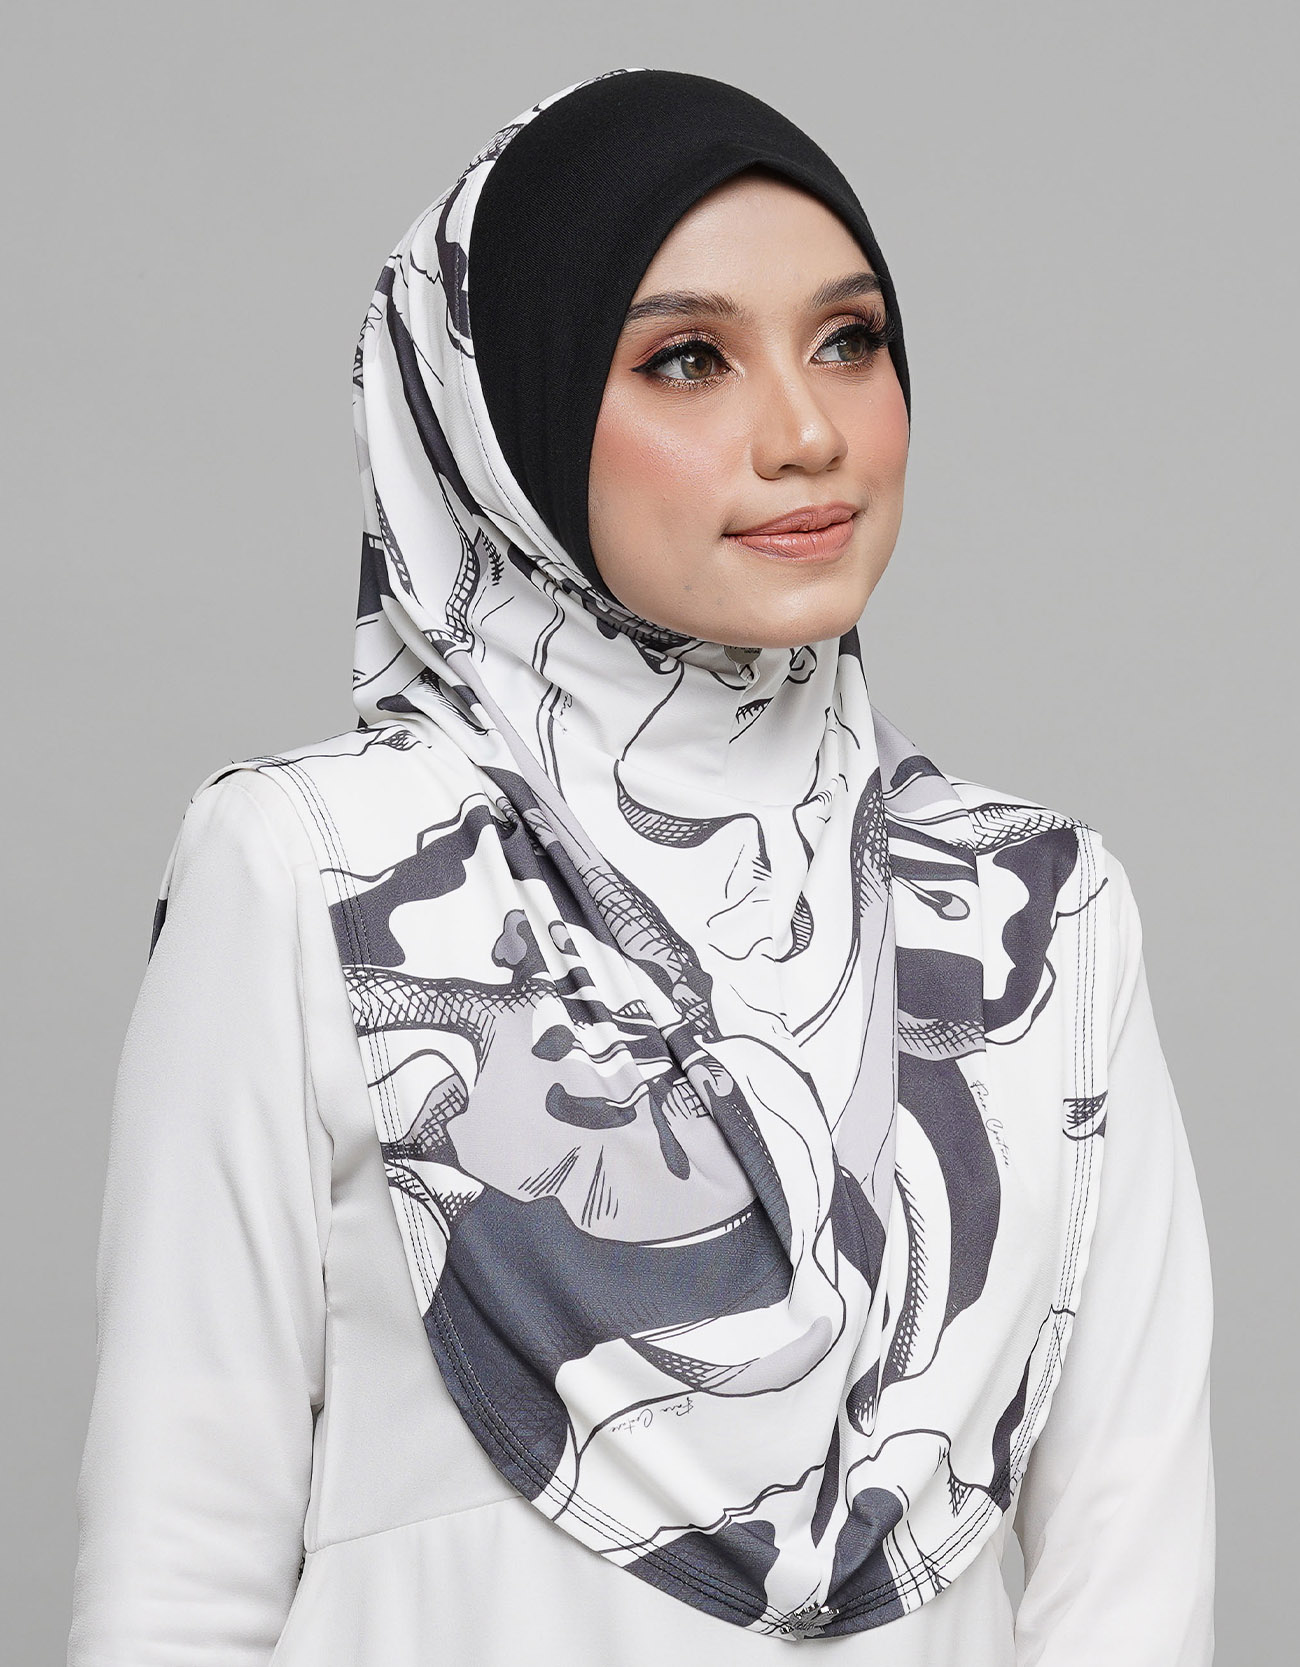 Express Hijab Damia Signature 04 - Black Edition